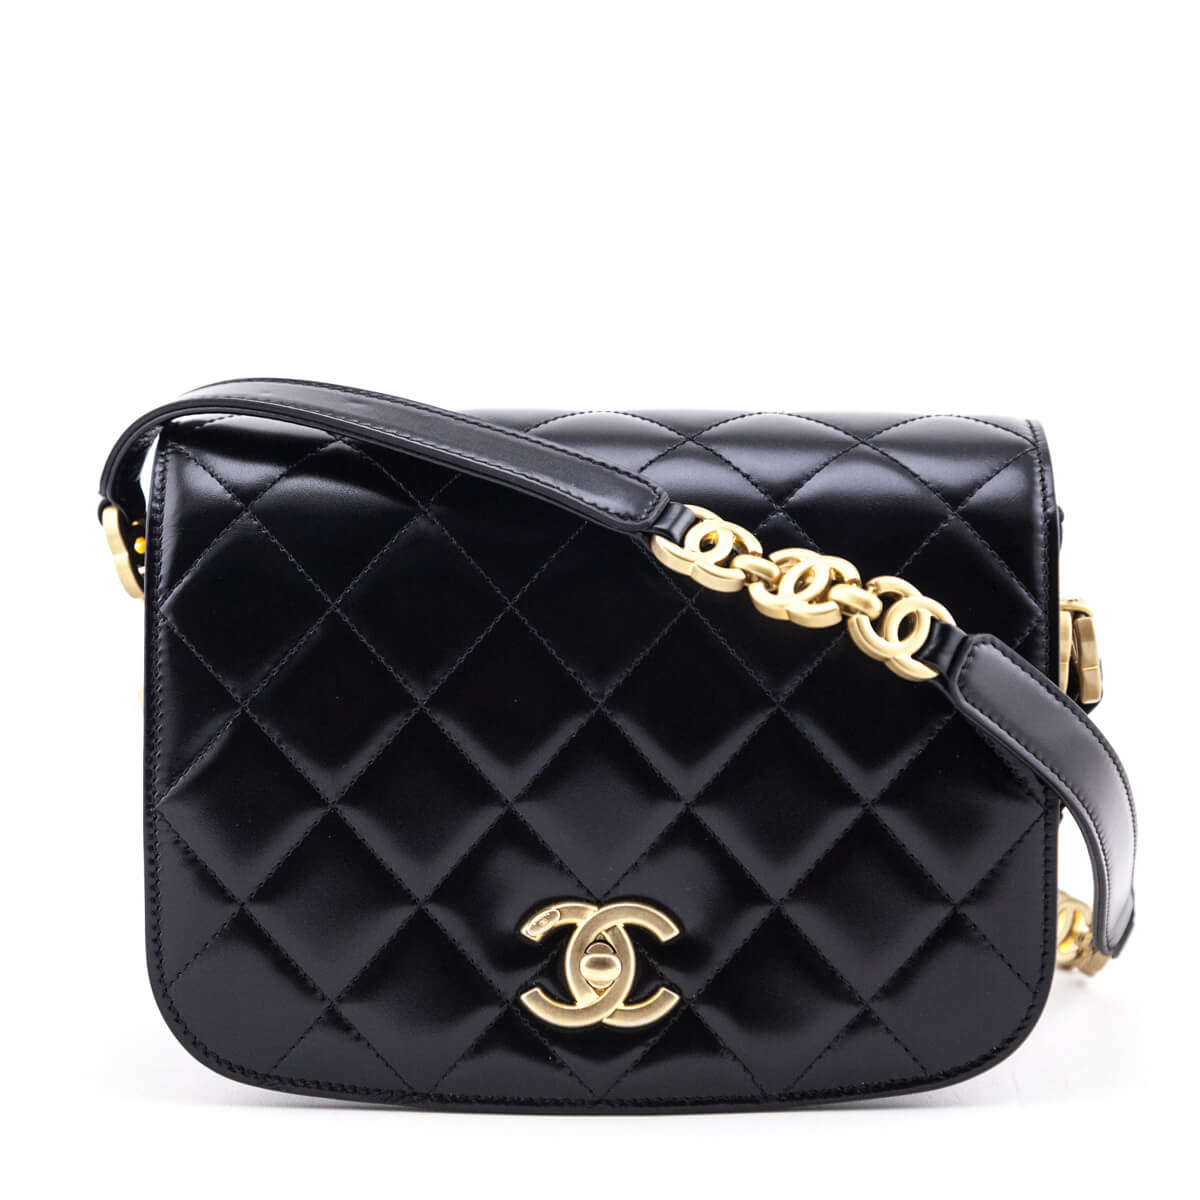 Introducing the Chanel 19 Bag  PurseBlog